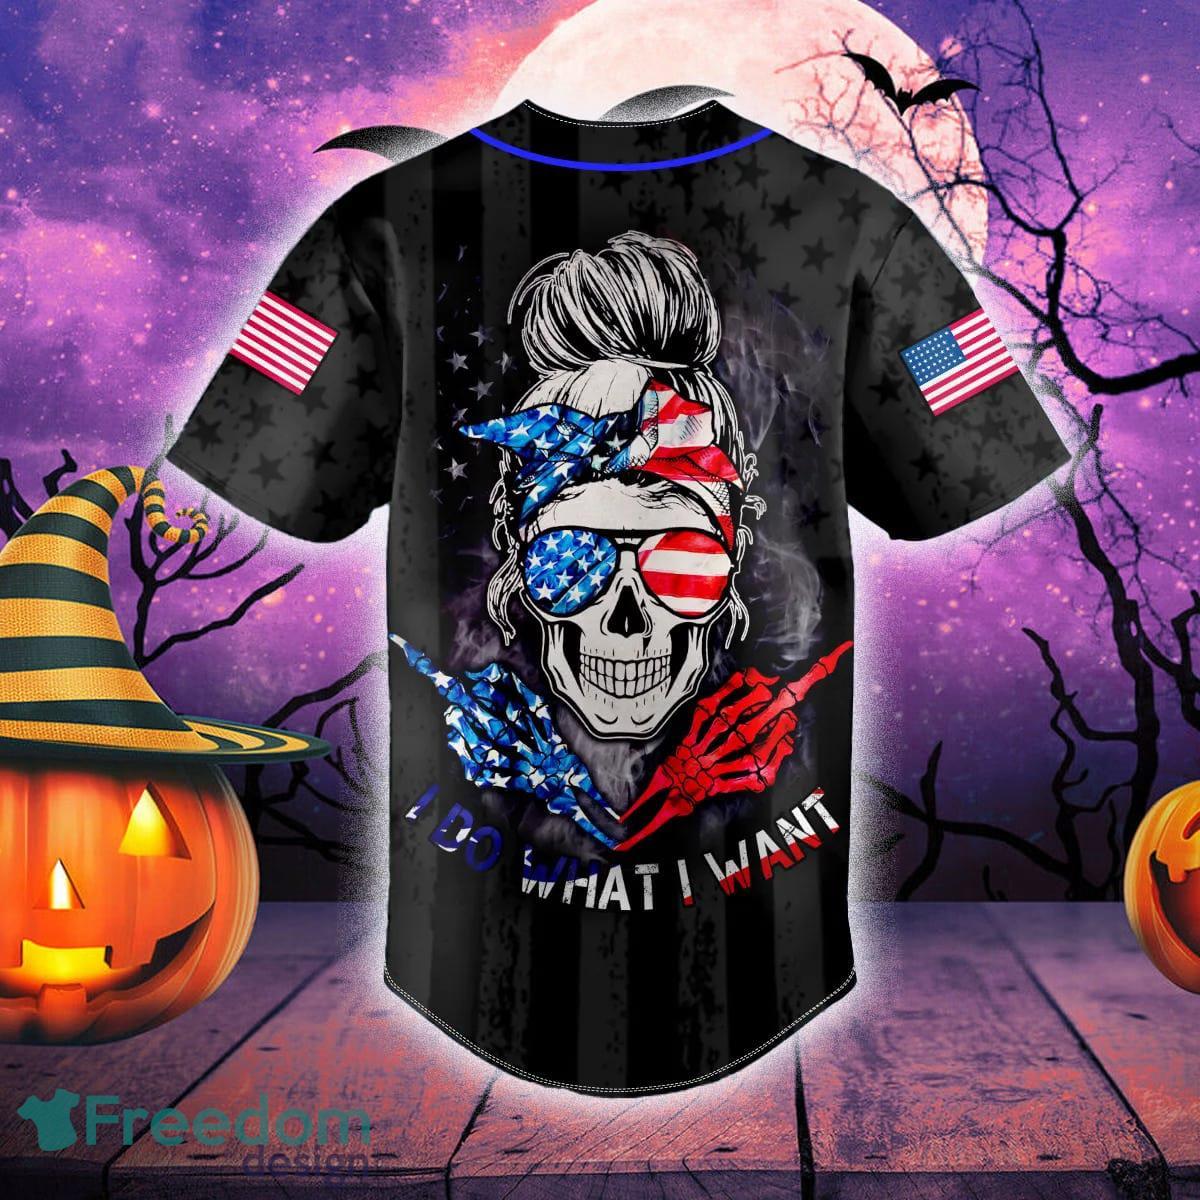 I Do What I Want American Flag Halloween Skull Baseball Jersey Shirt Custom  Name - Freedomdesign